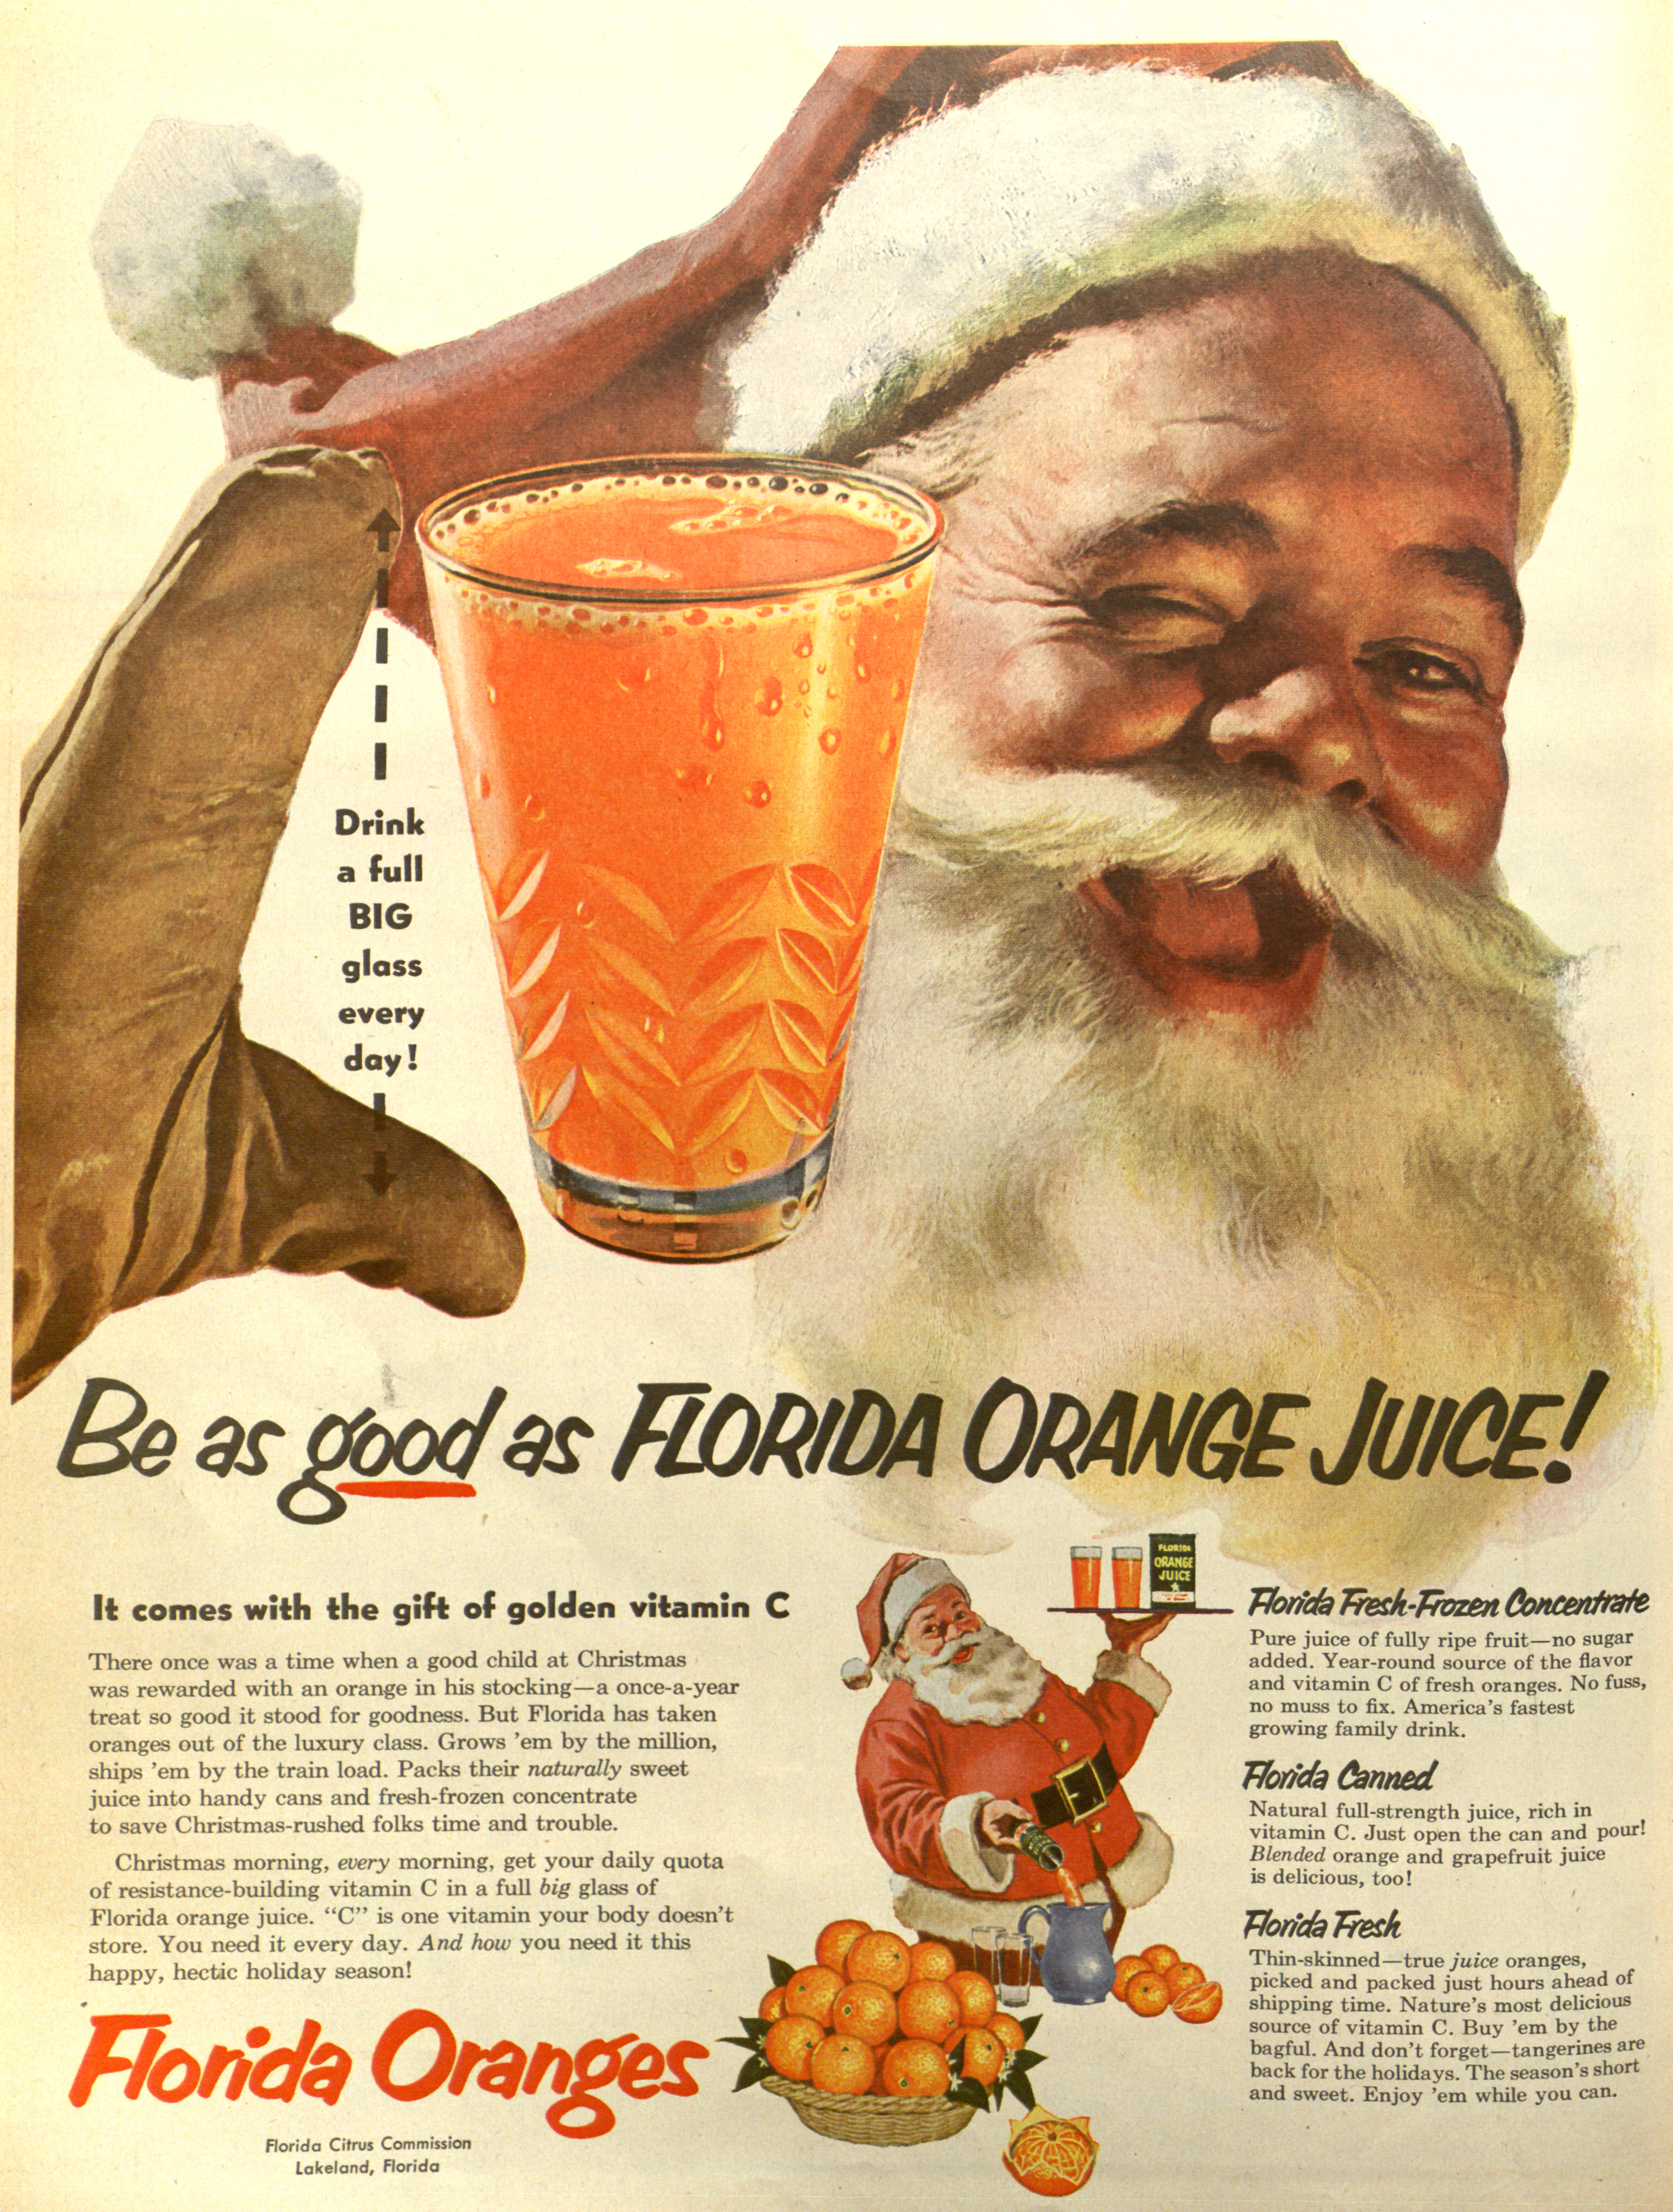 Florida Citrus Commission - published in Life - December 21, 1953